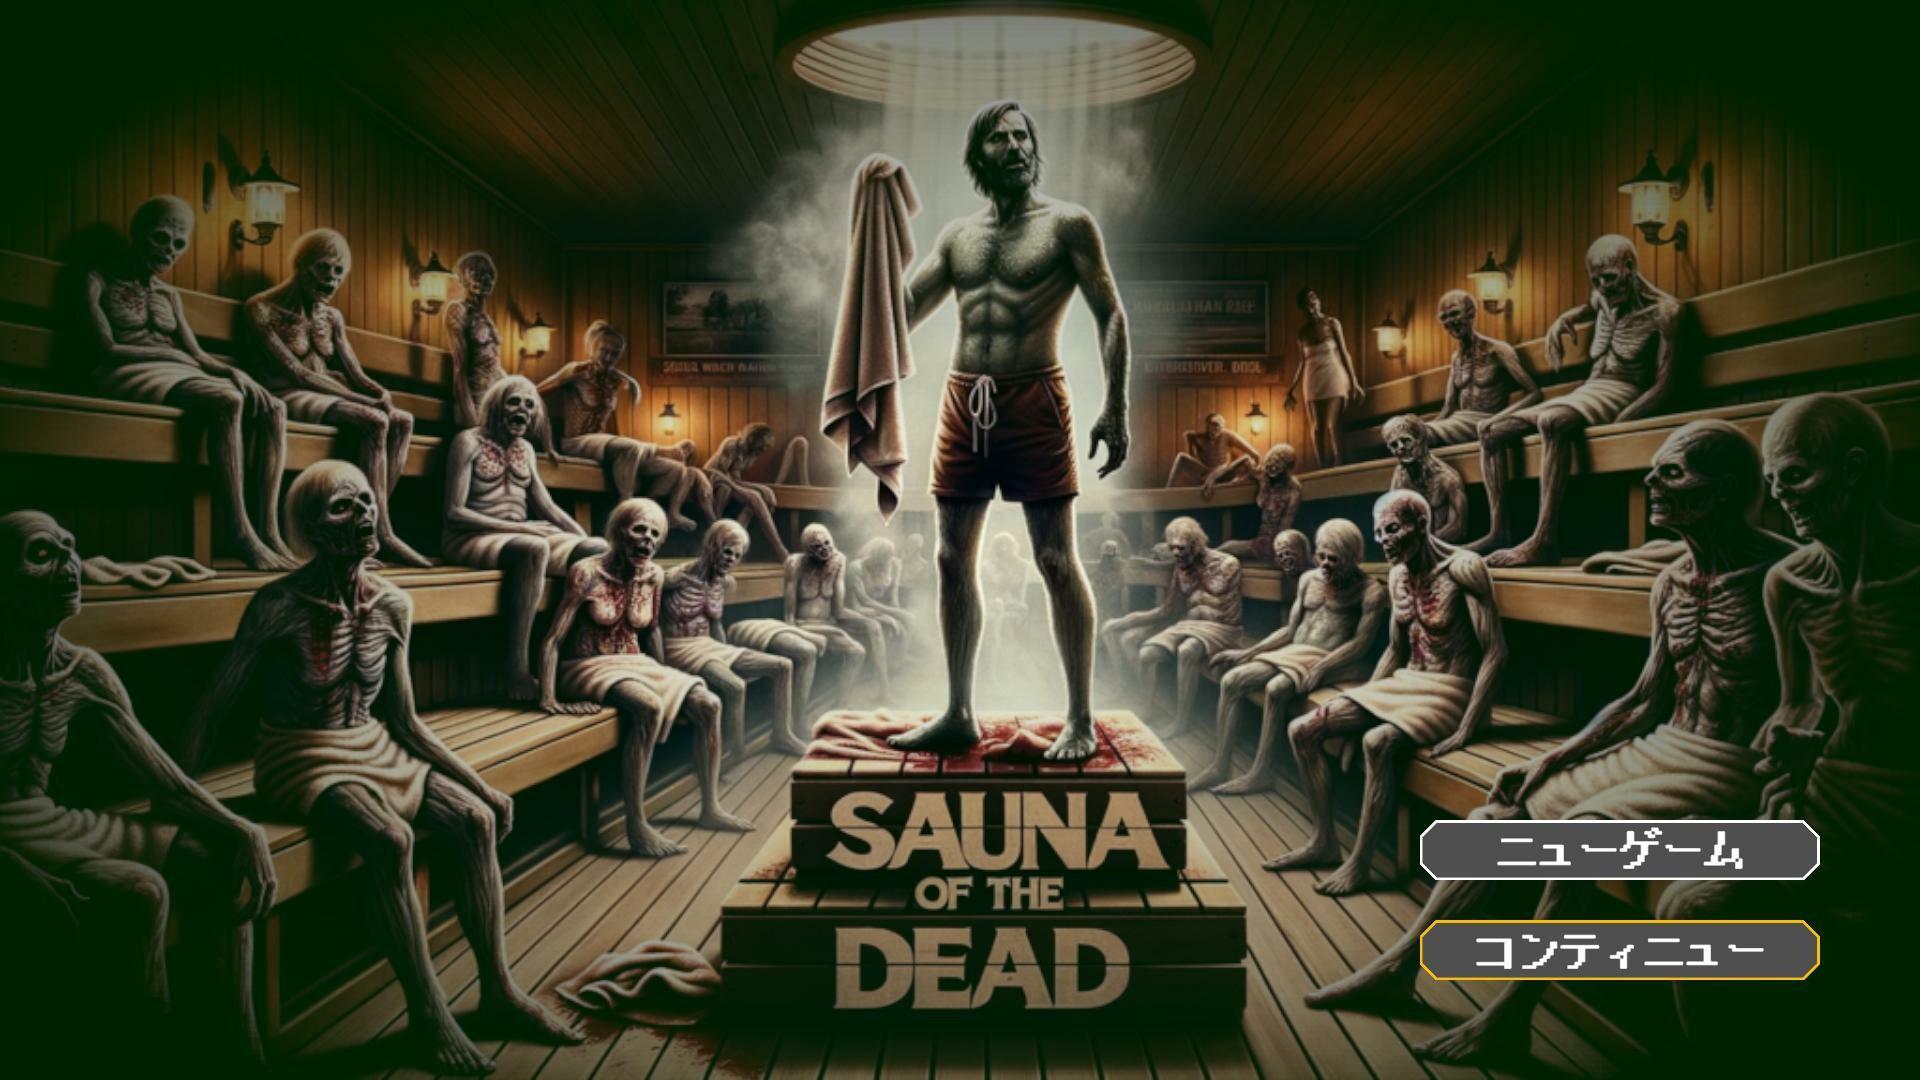 Screenshot 1 of Sauna of the DEAD 